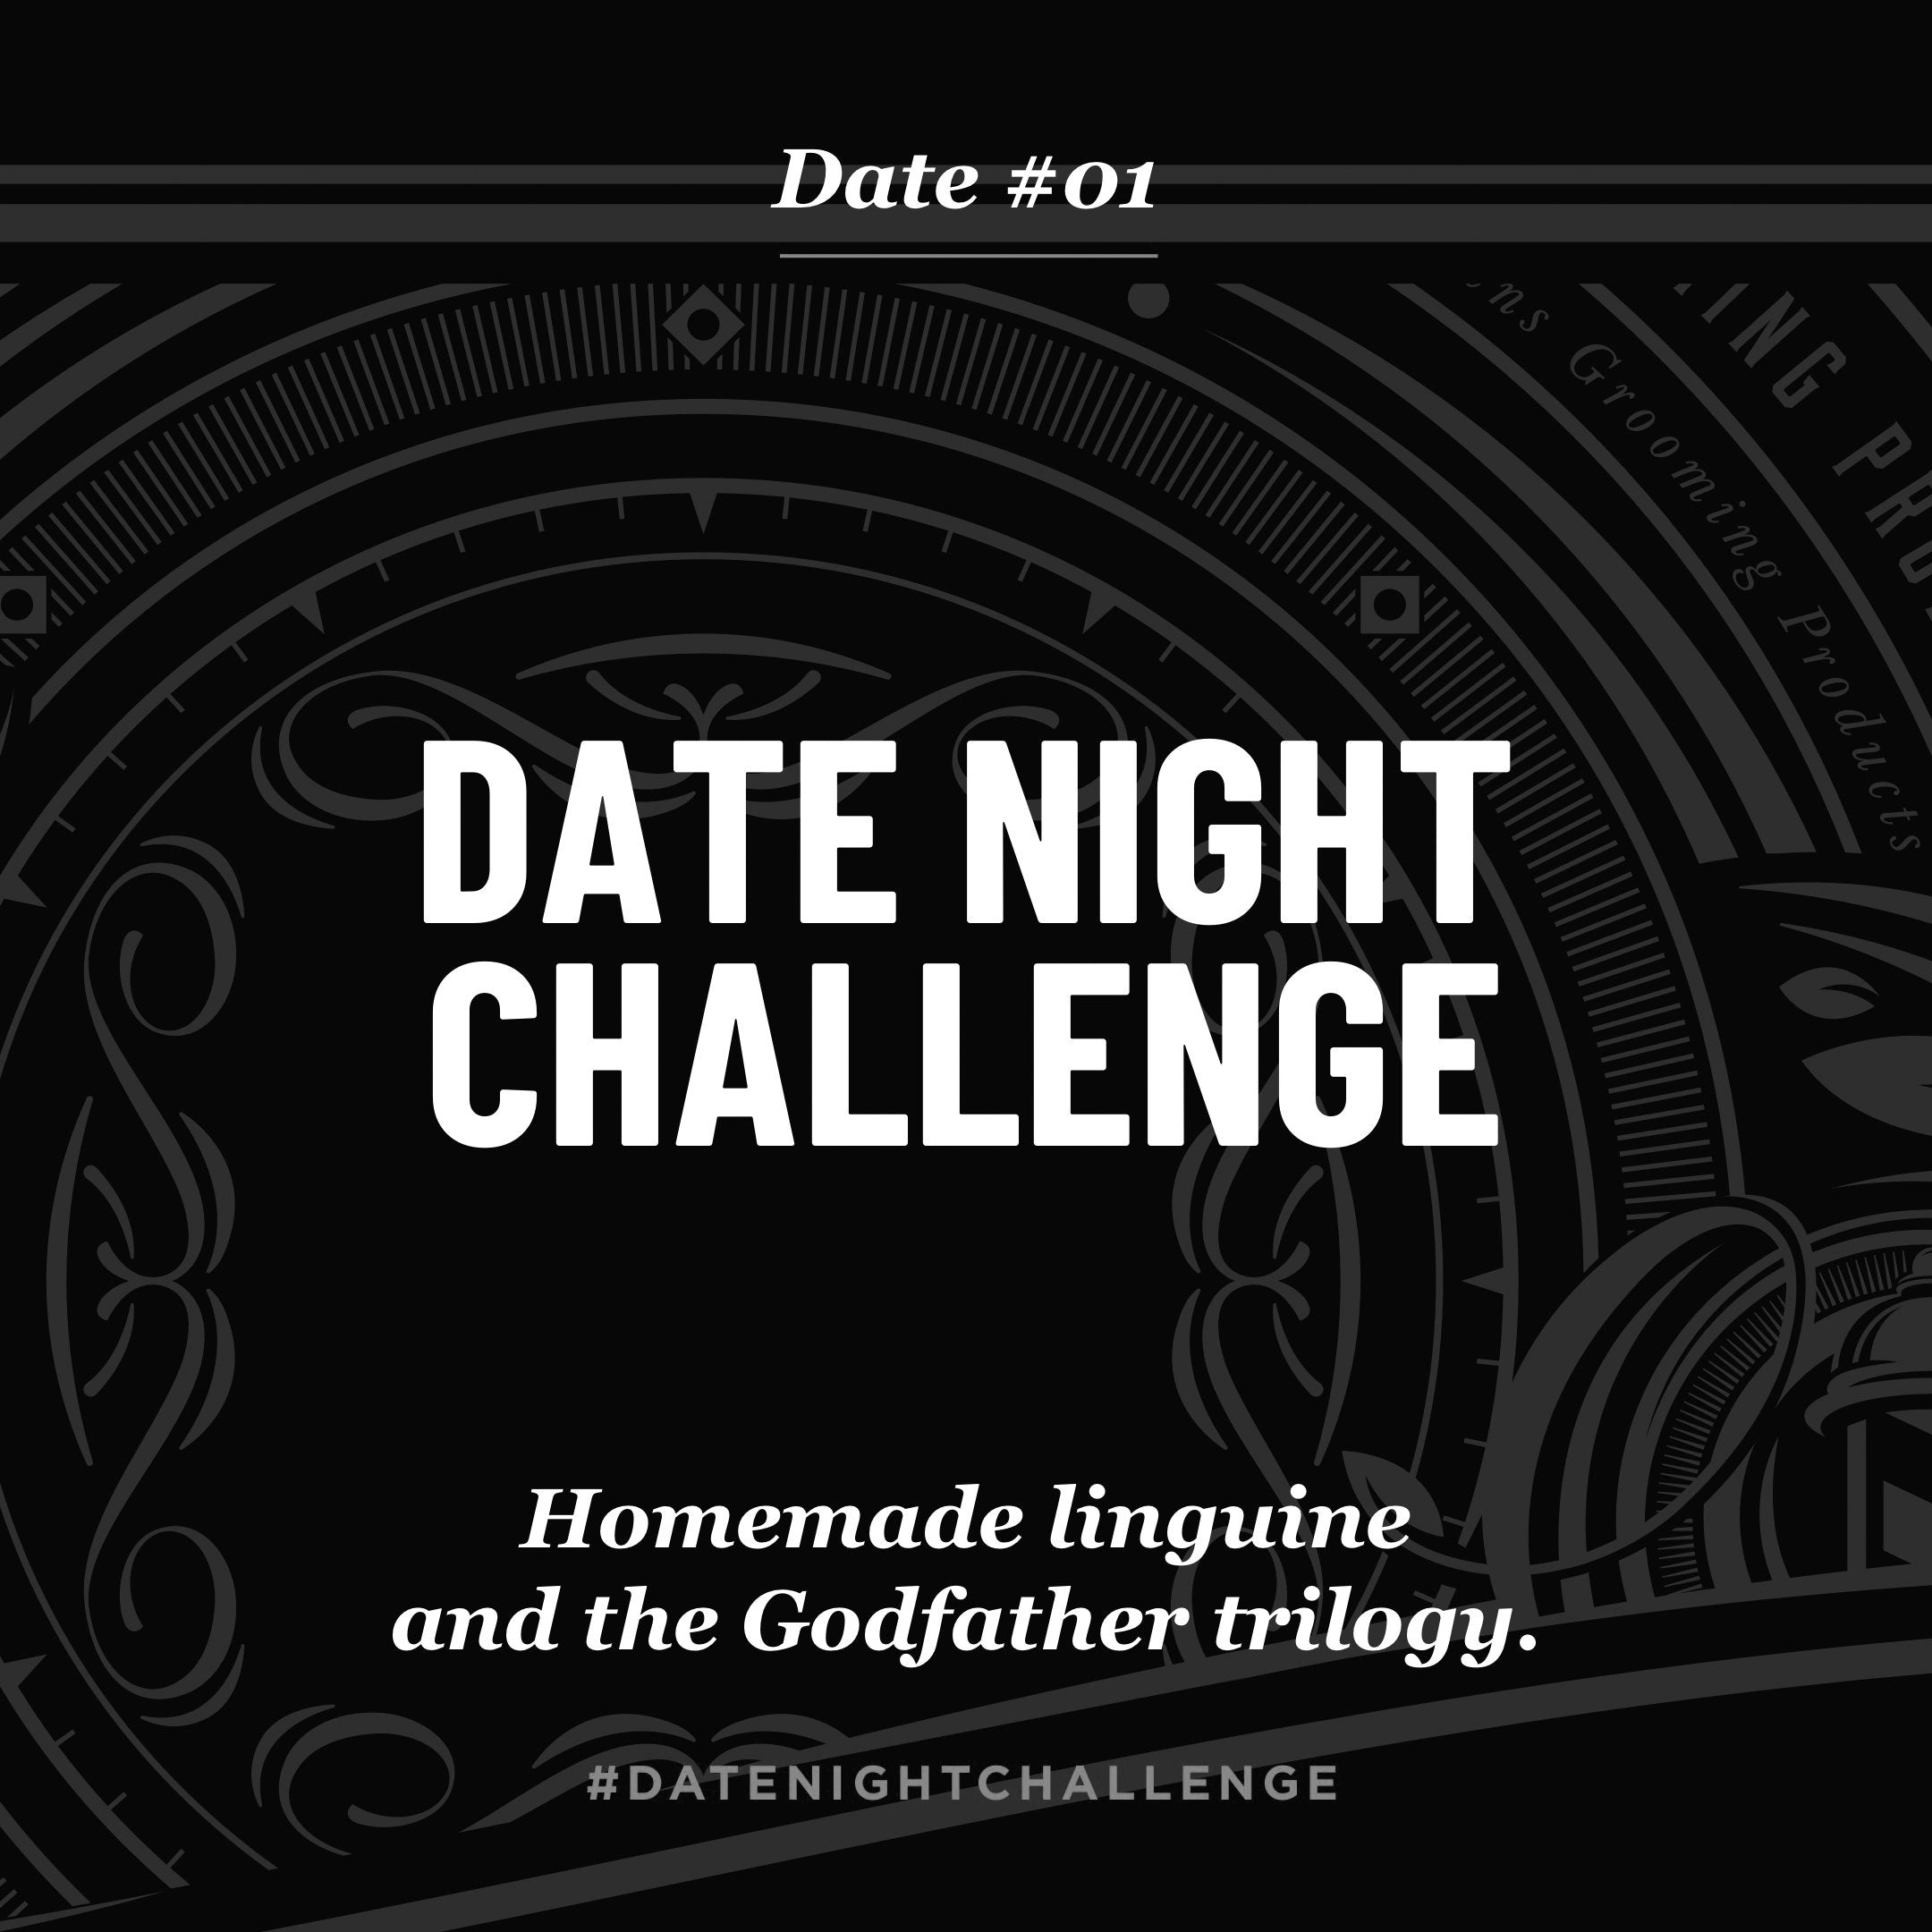 Date night challenge